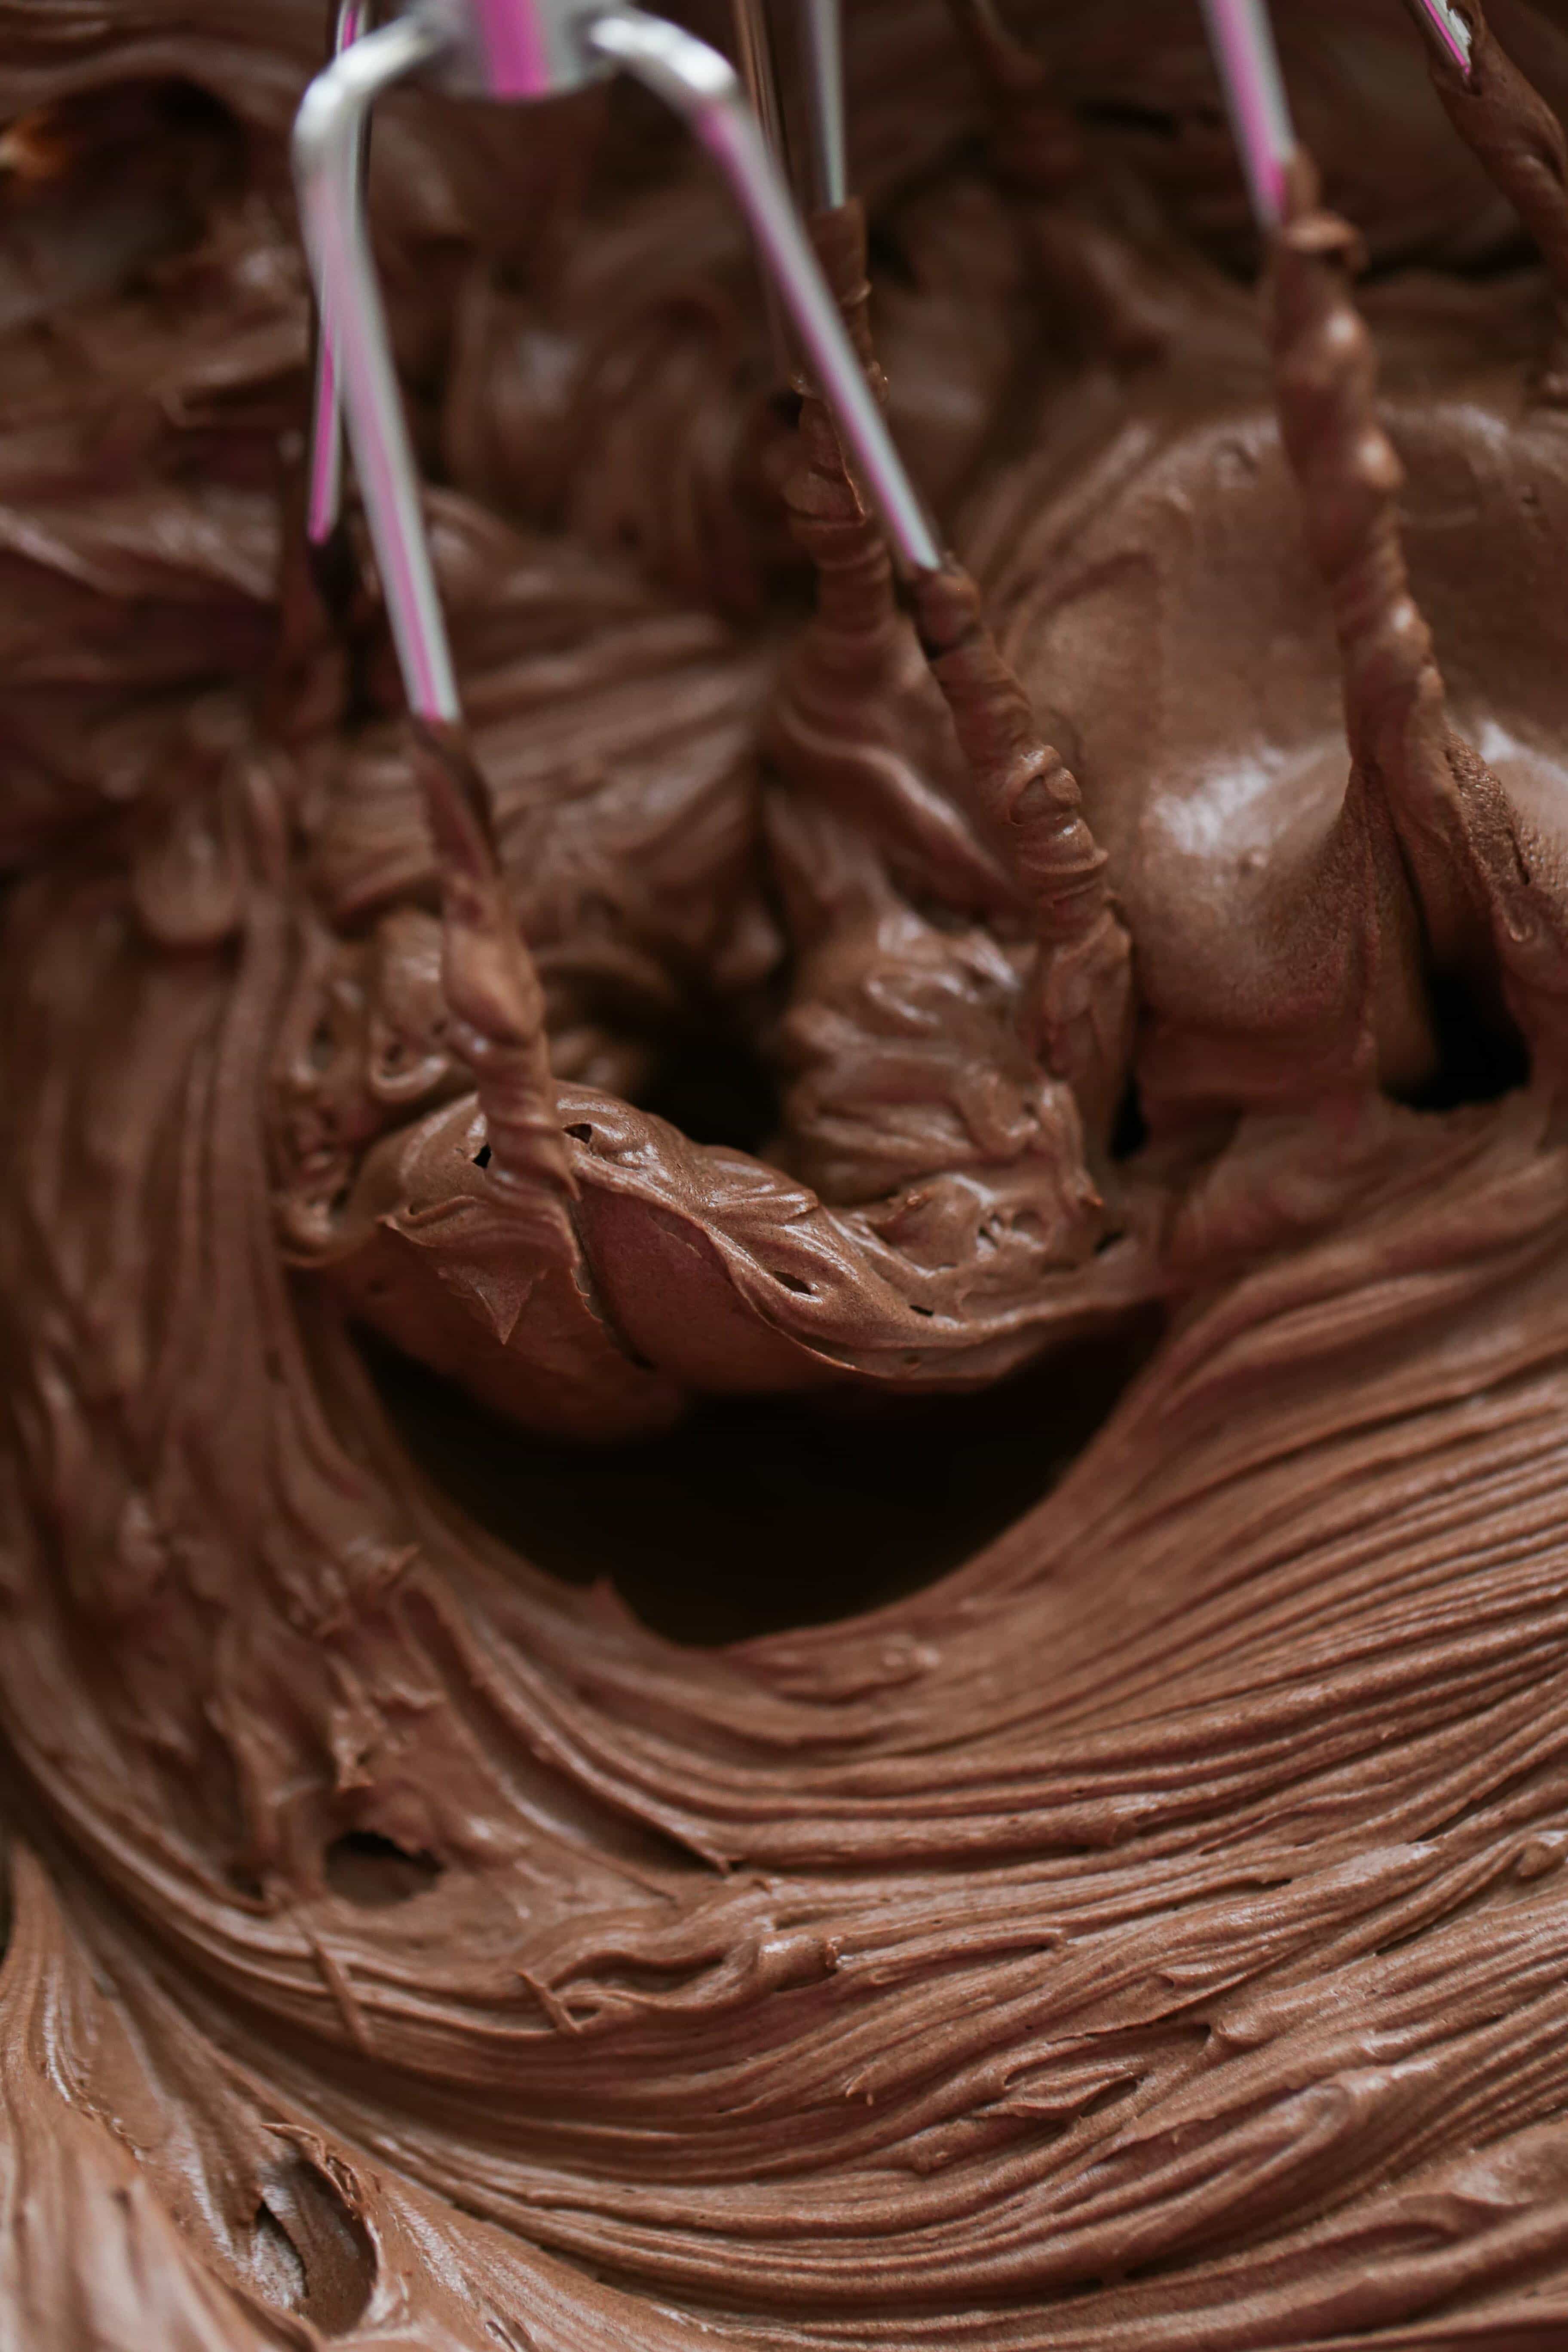 Super Easy Chocolate Frosting Recipe - Lauren's Latest